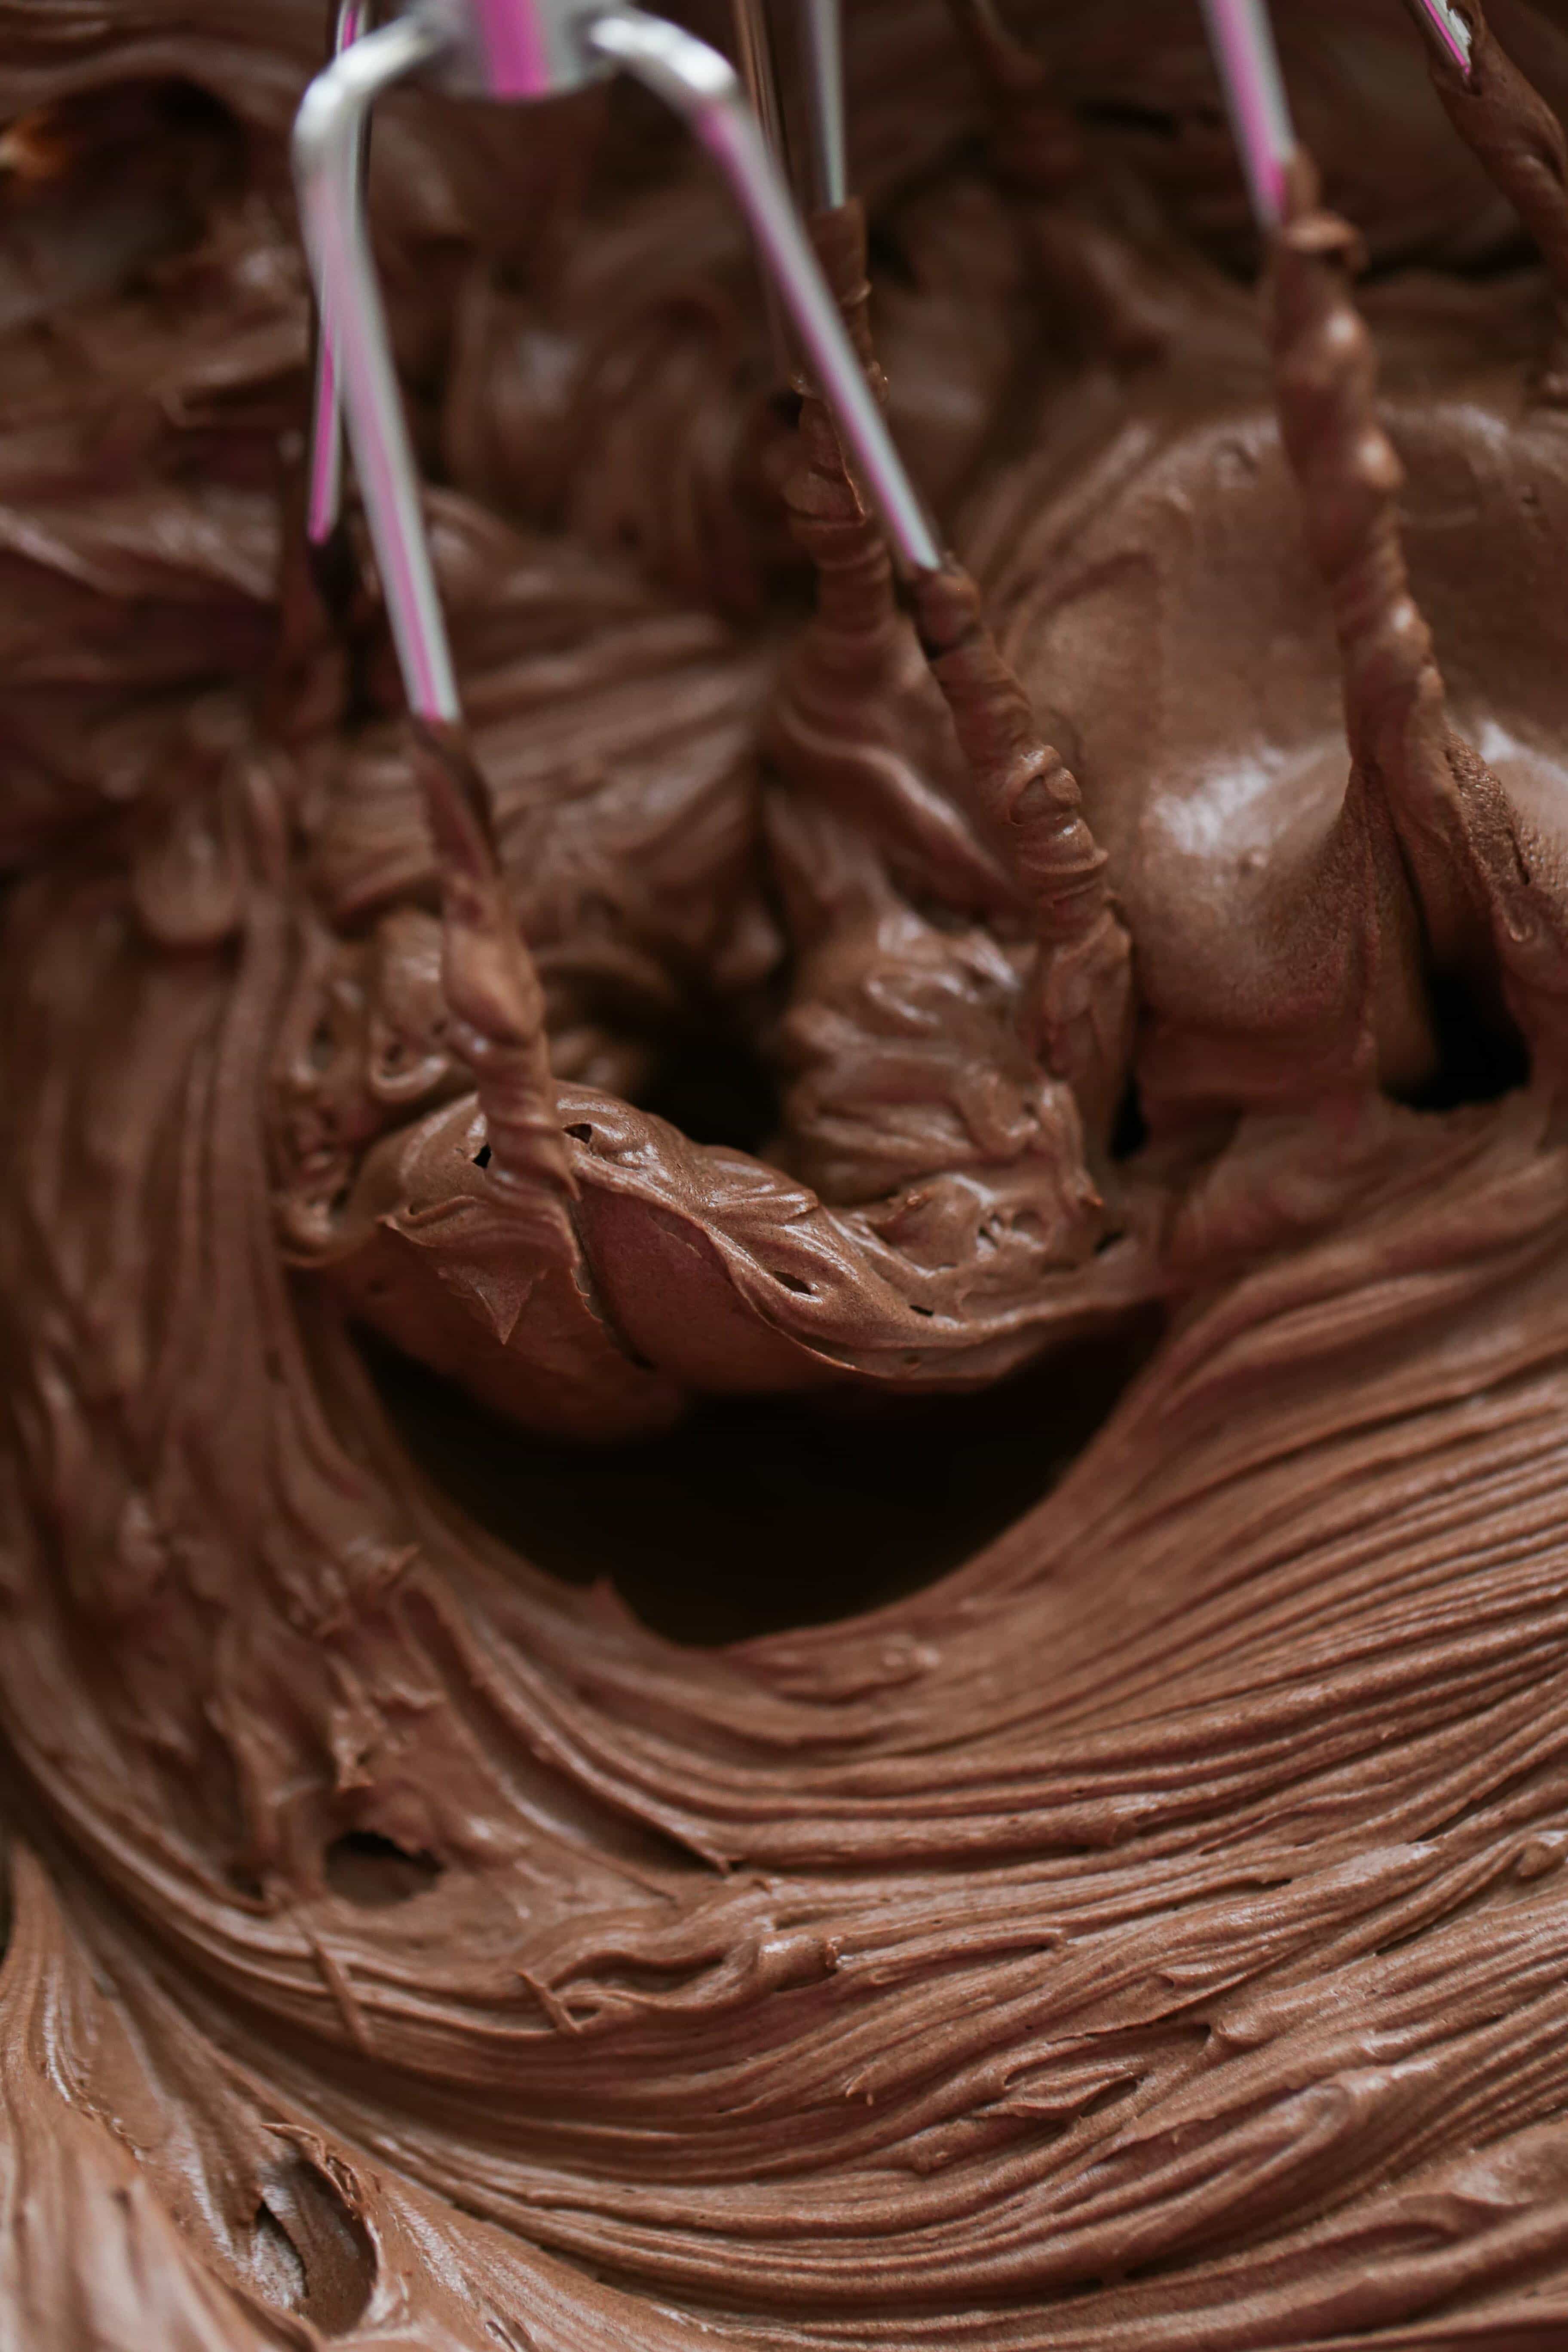 Super Easy Chocolate Frosting Recipe - Lauren's Latest